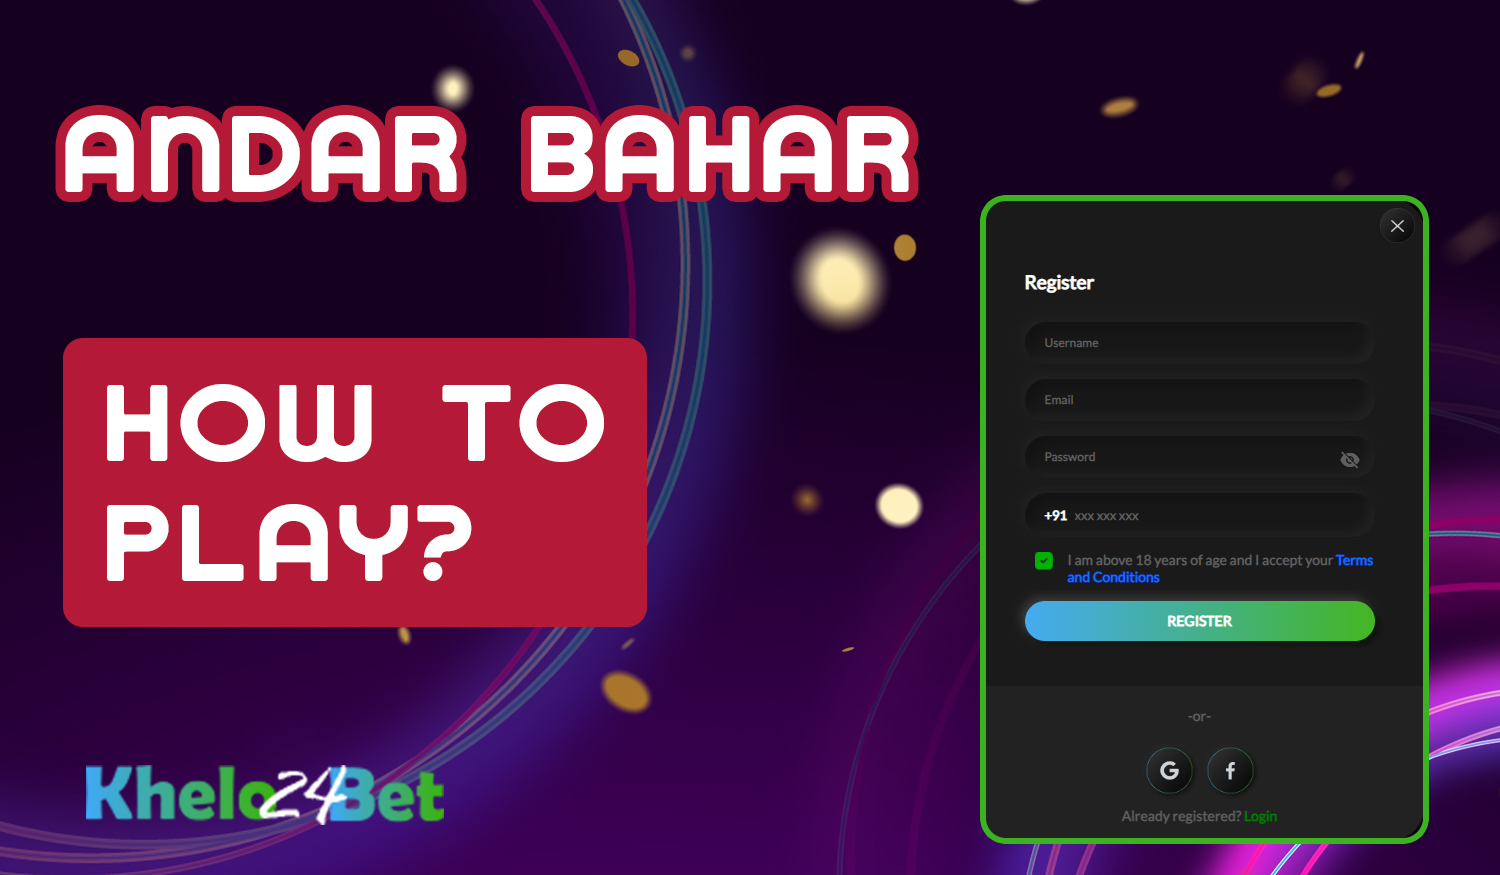 How beginner Khelo24bet users can start playing Andar Bahar